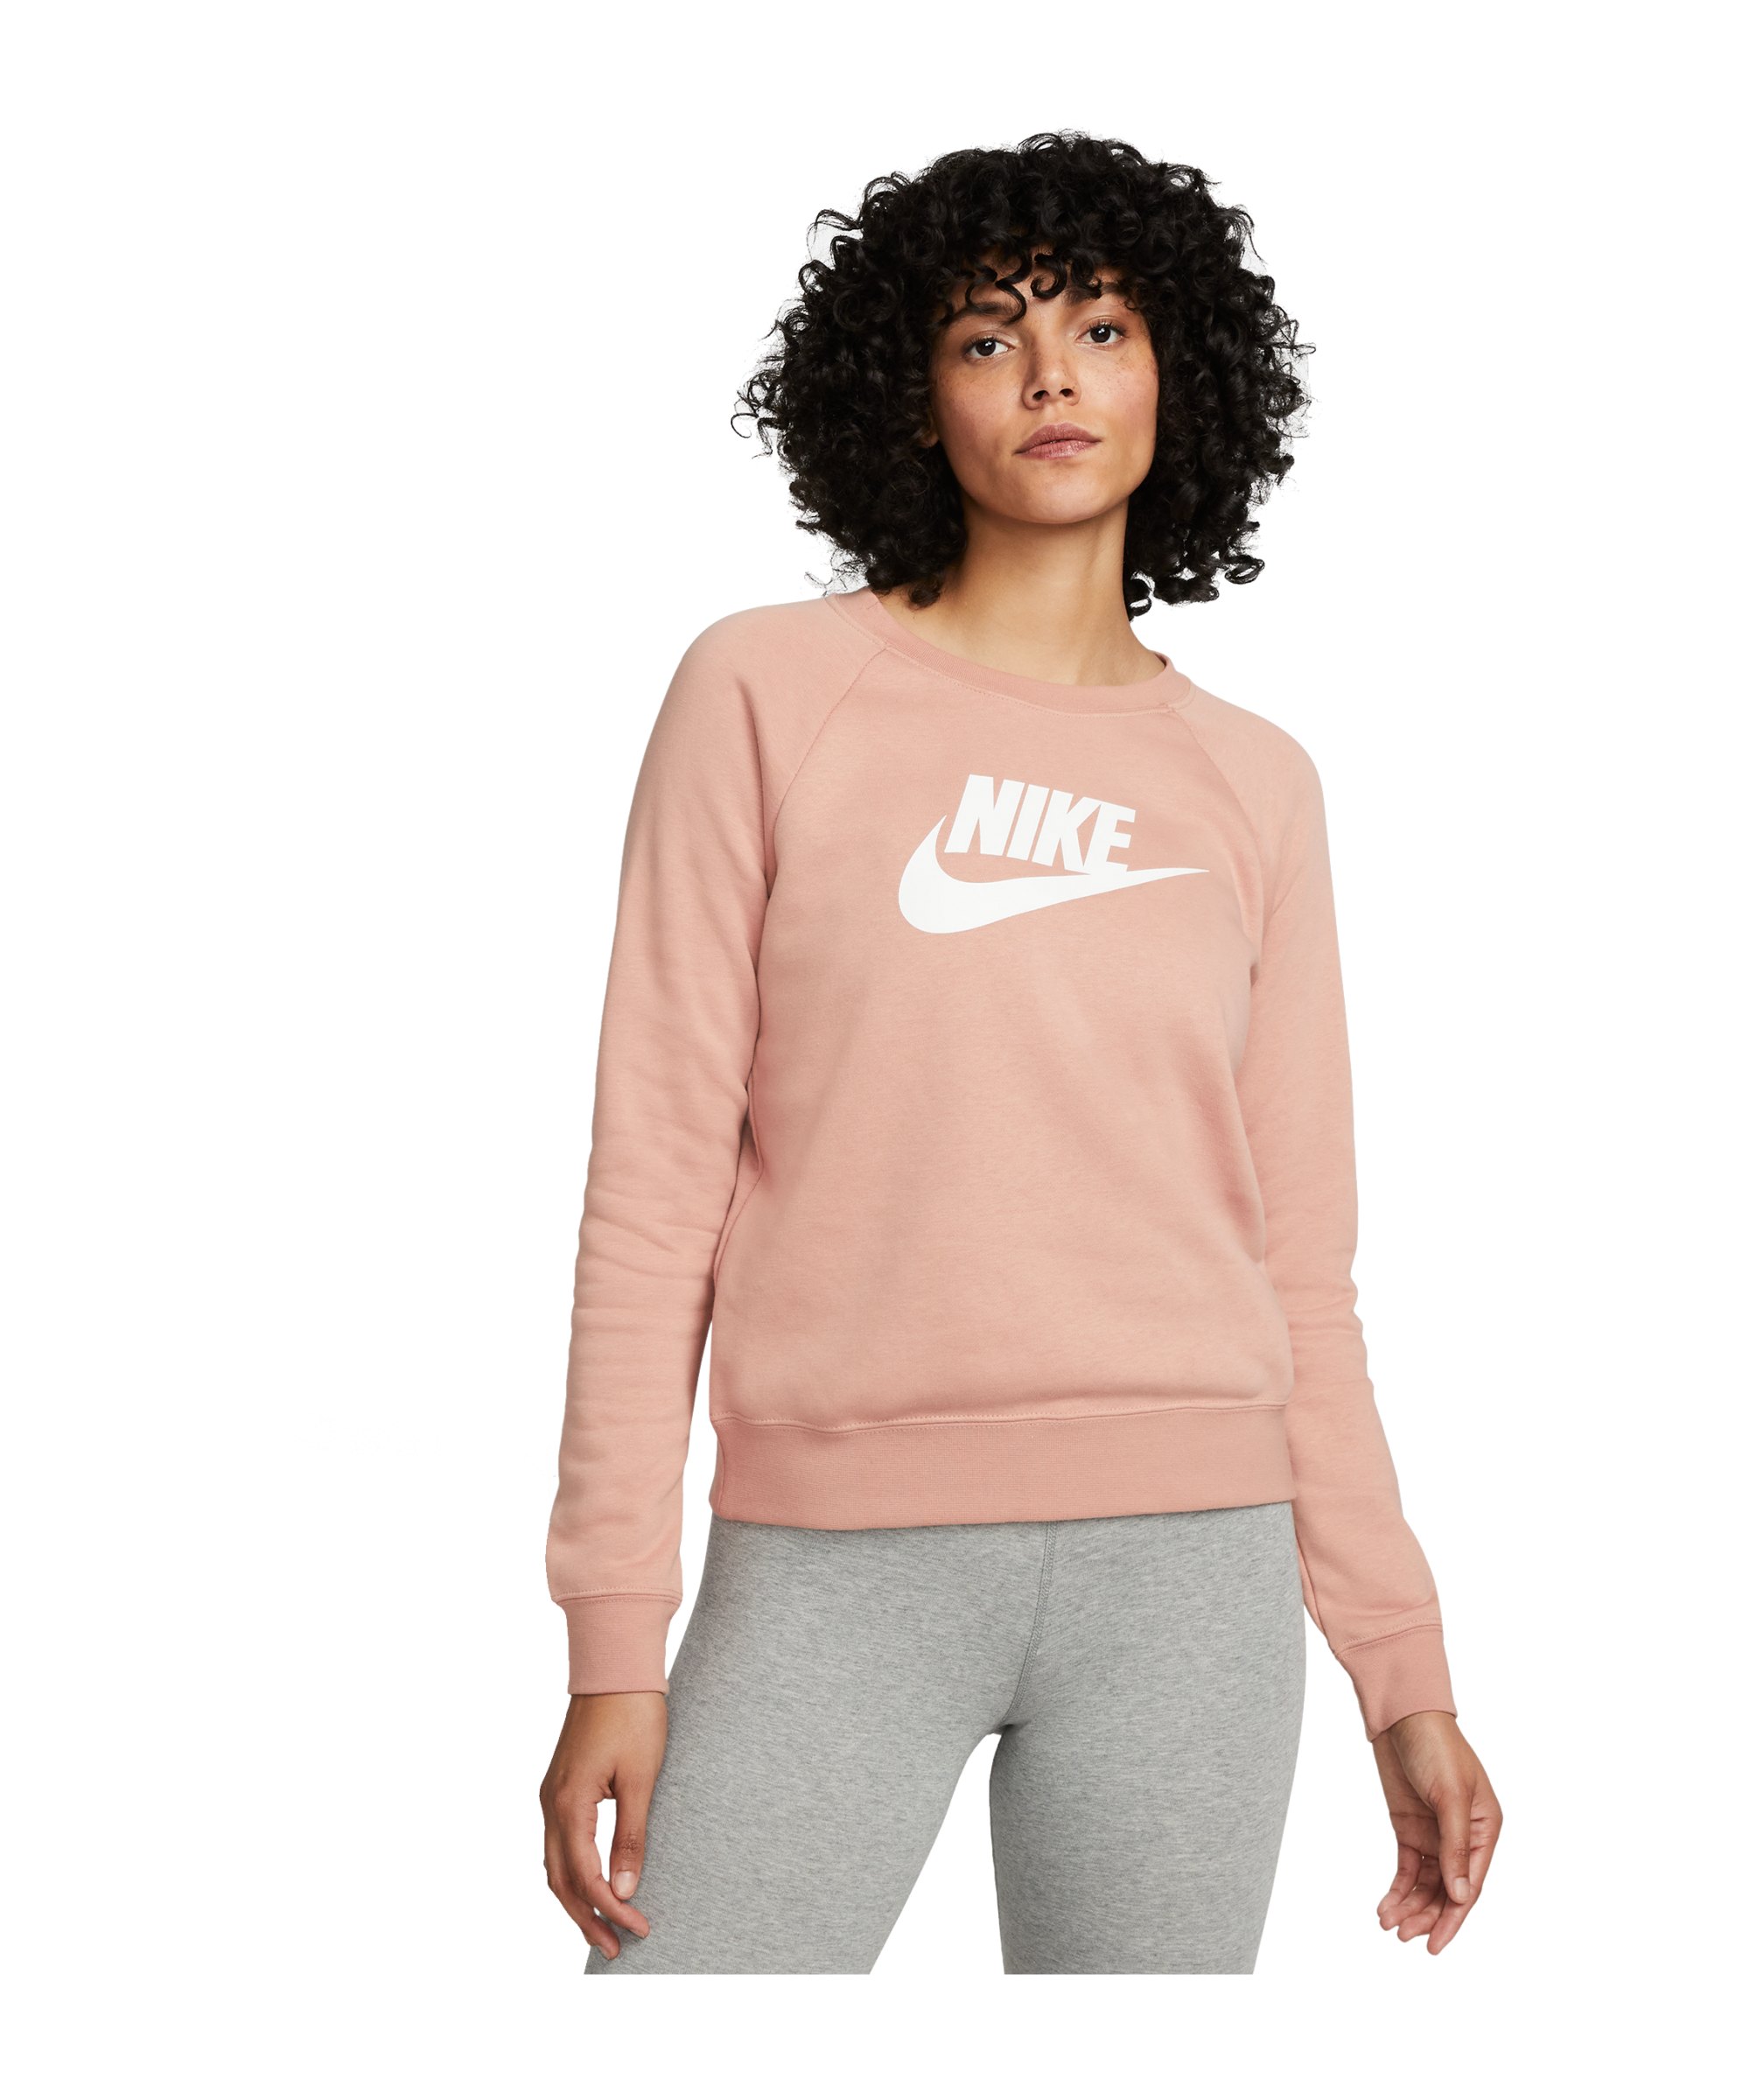 Nike Crew Fleece Sweatshirt Damen Rosa Weiss F609 - rosa